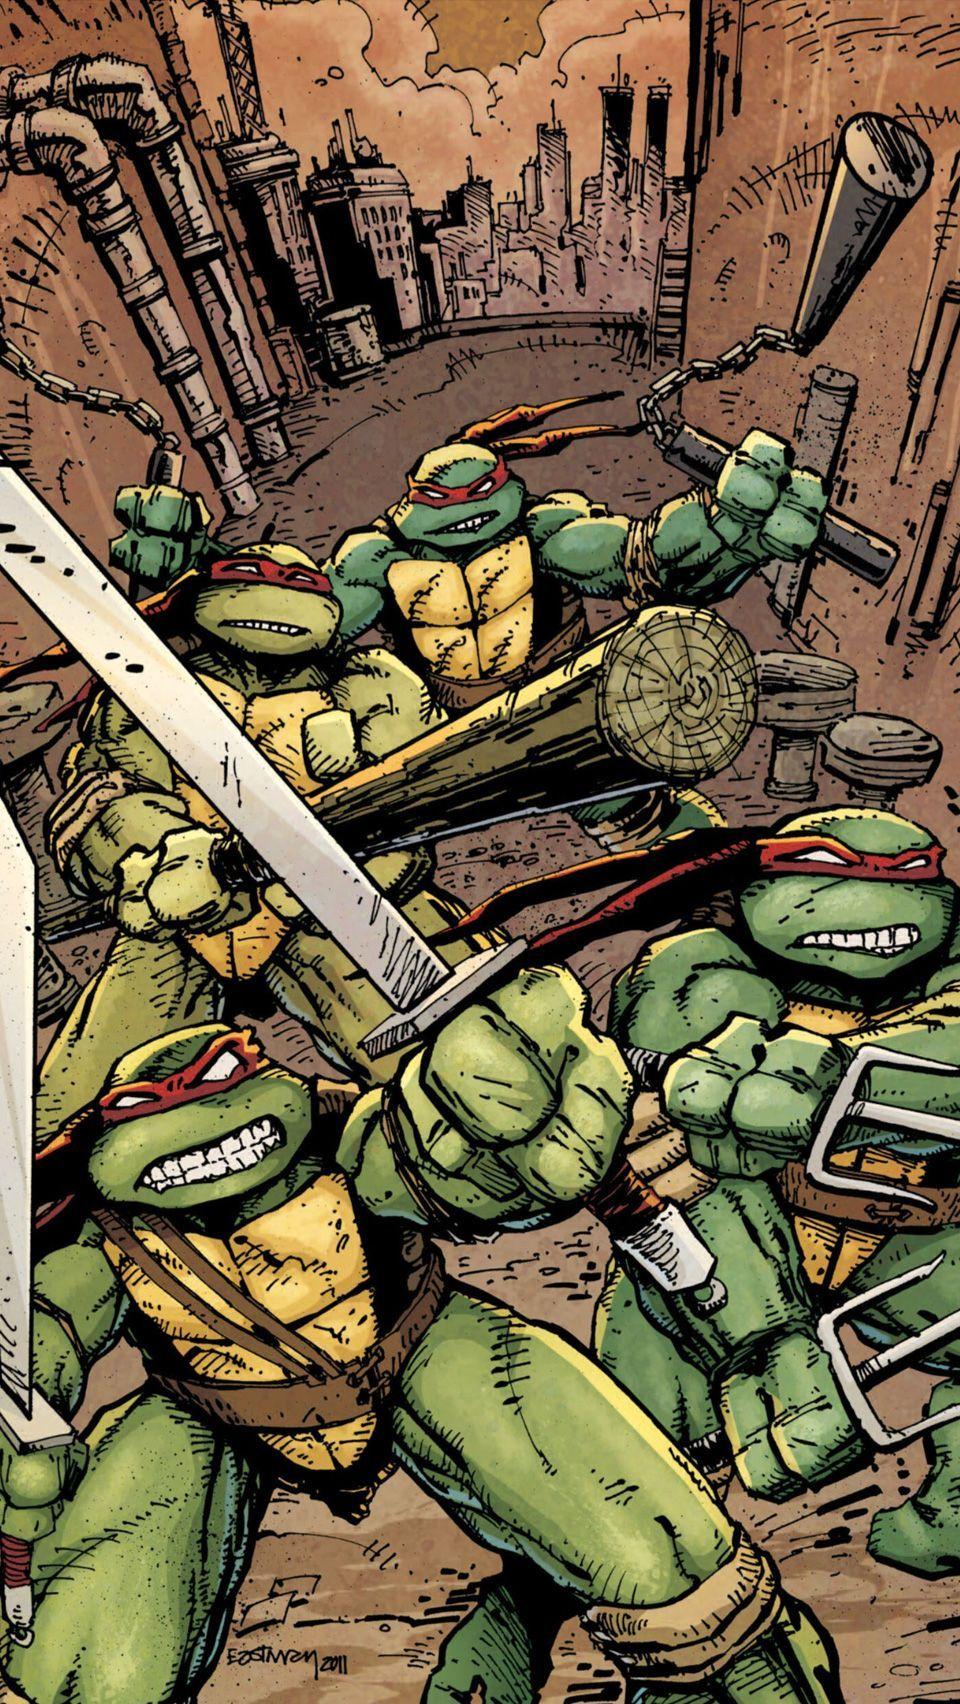 280 Teenage Mutant Ninja Turtles HD Wallpapers and Backgrounds